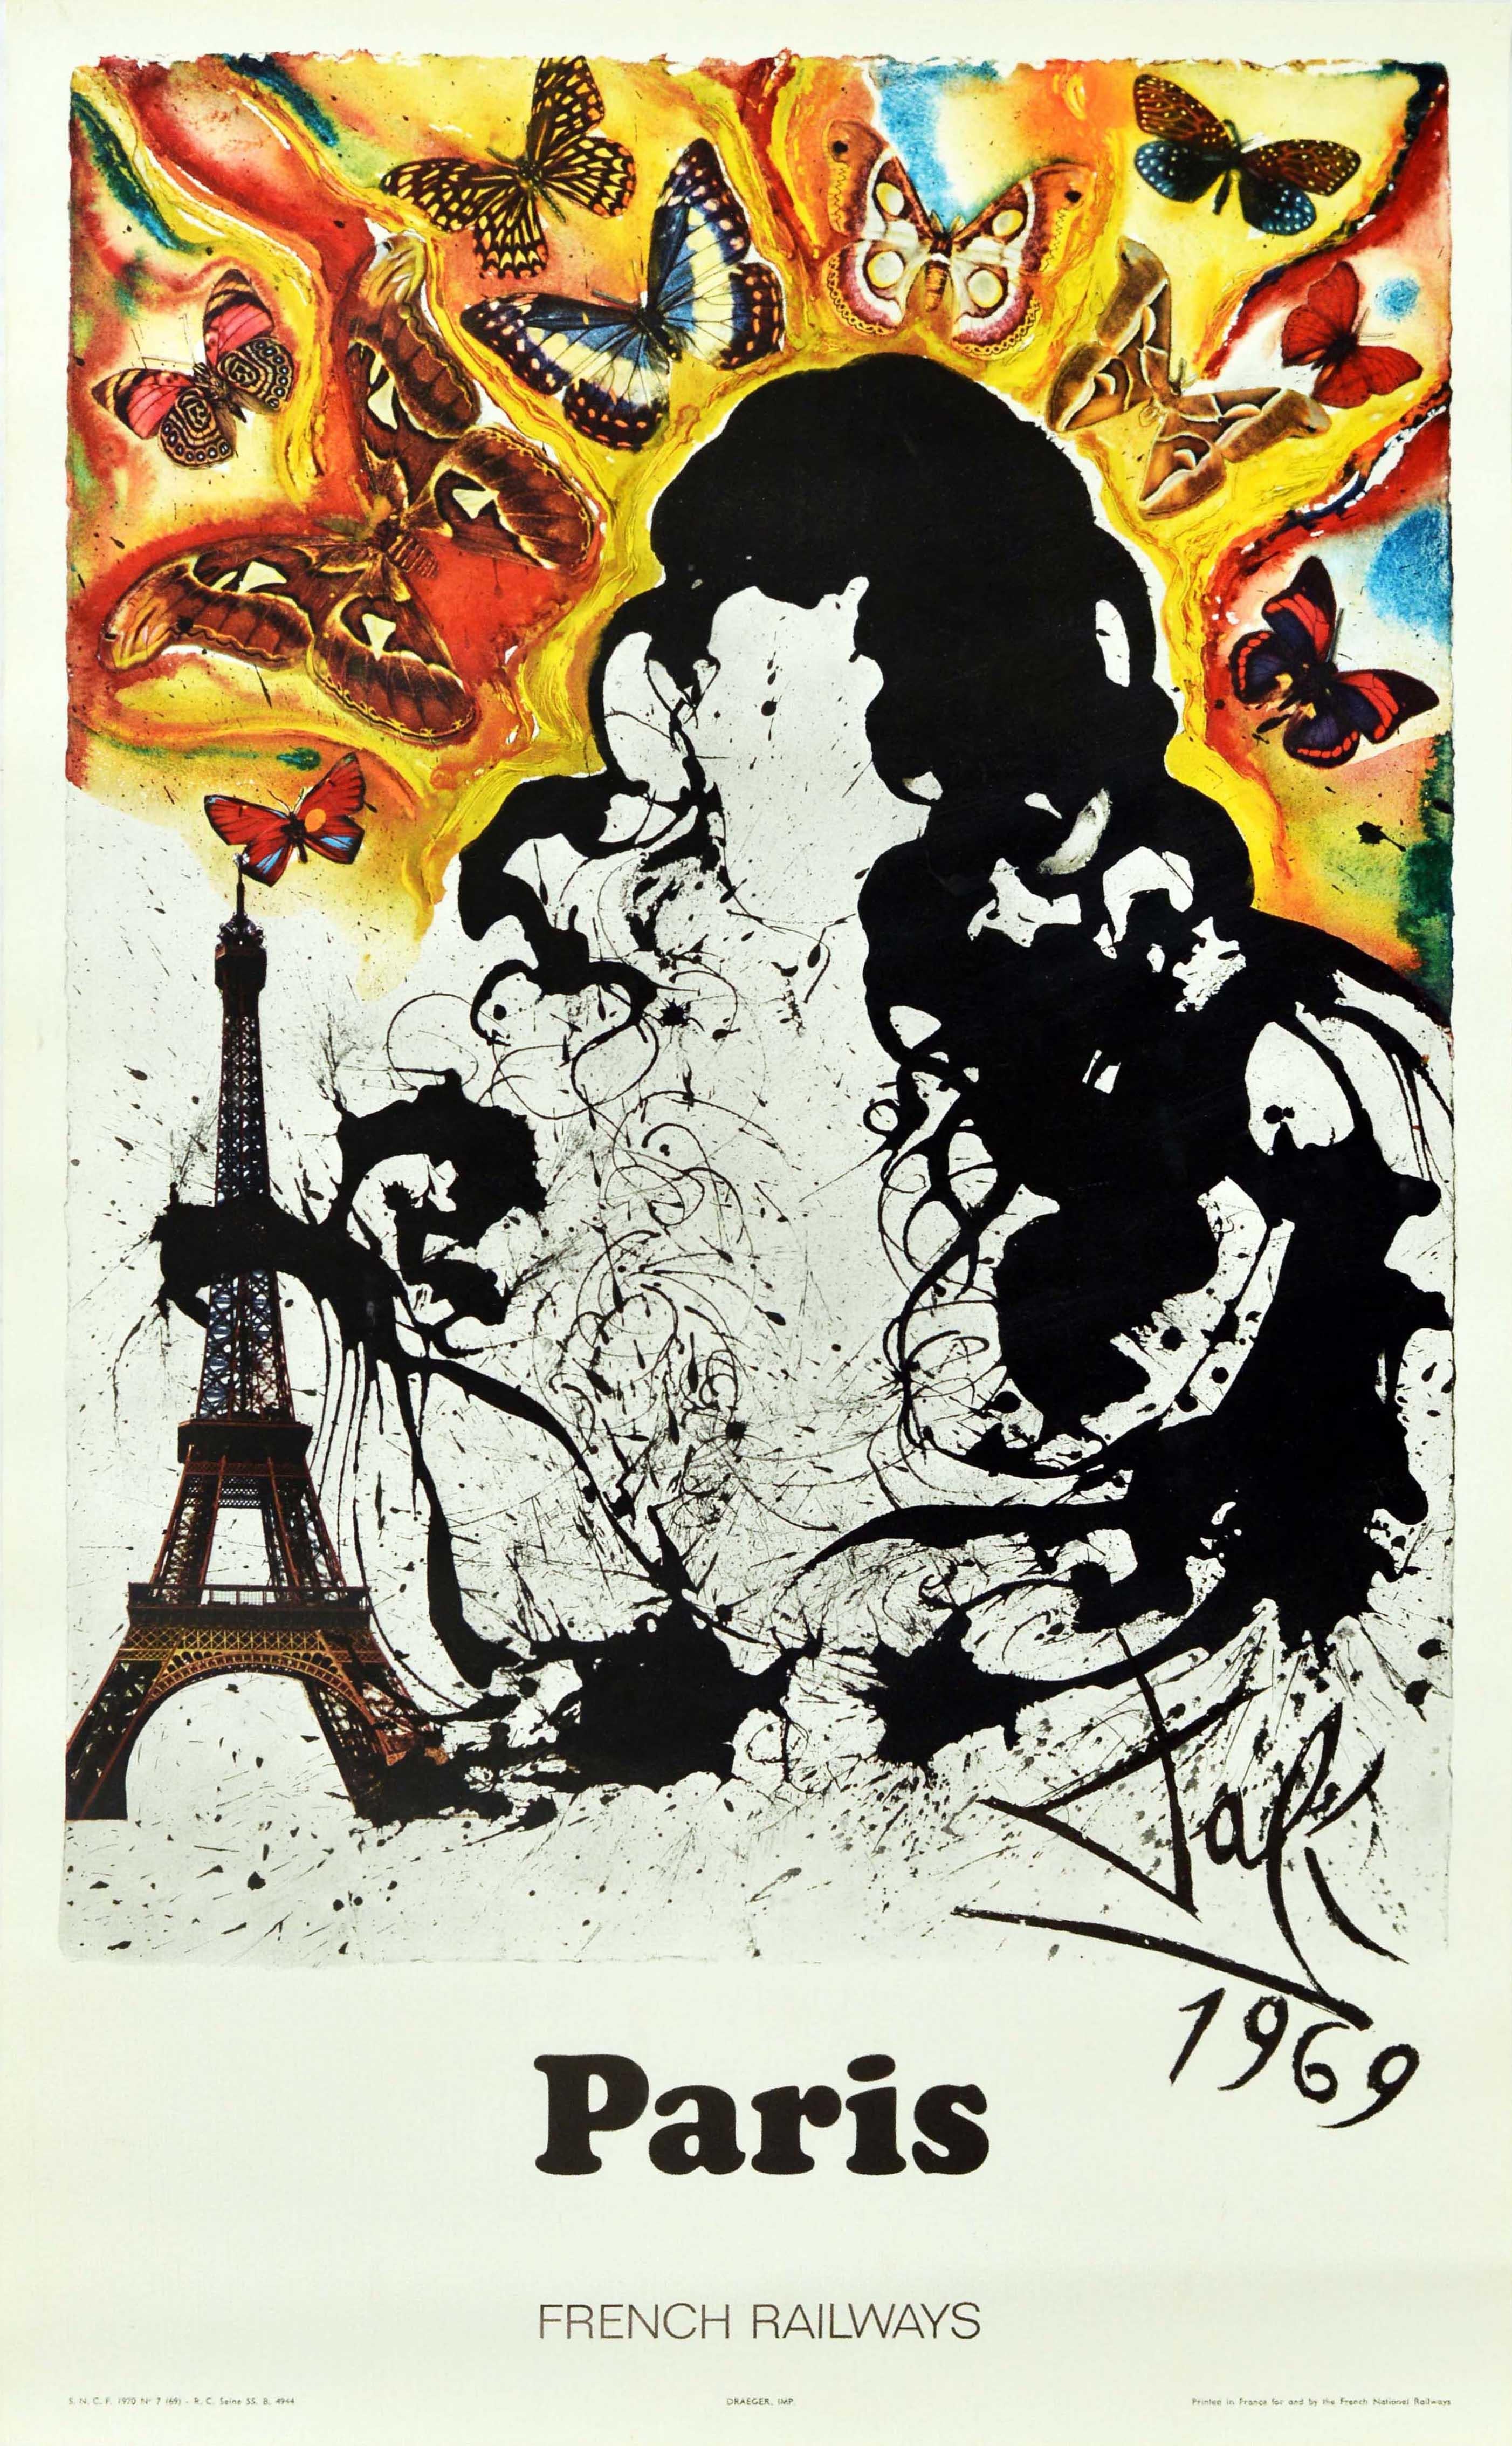 Salvador Dalí Print - Original Vintage Railway Poster Paris By Dali For SNCF Tour Eiffel Abstract Art 